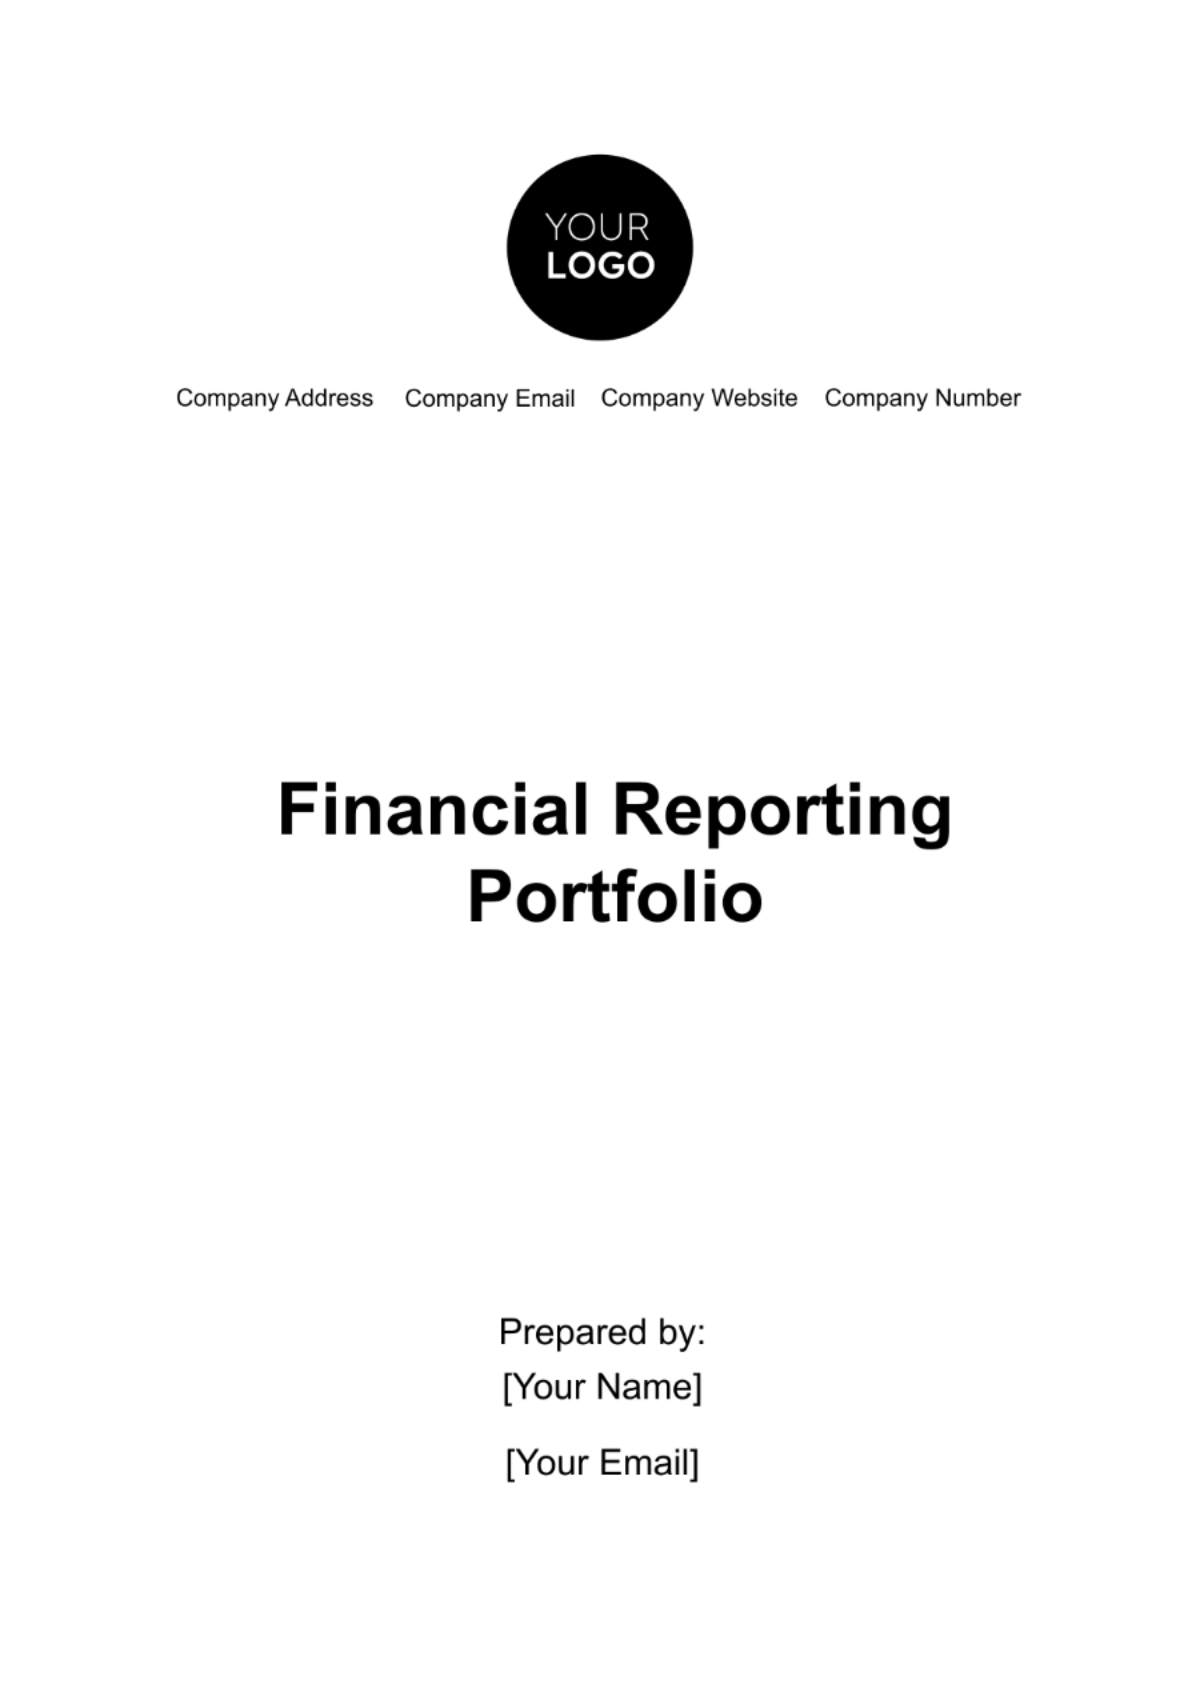 Financial Reporting Portfolio Template